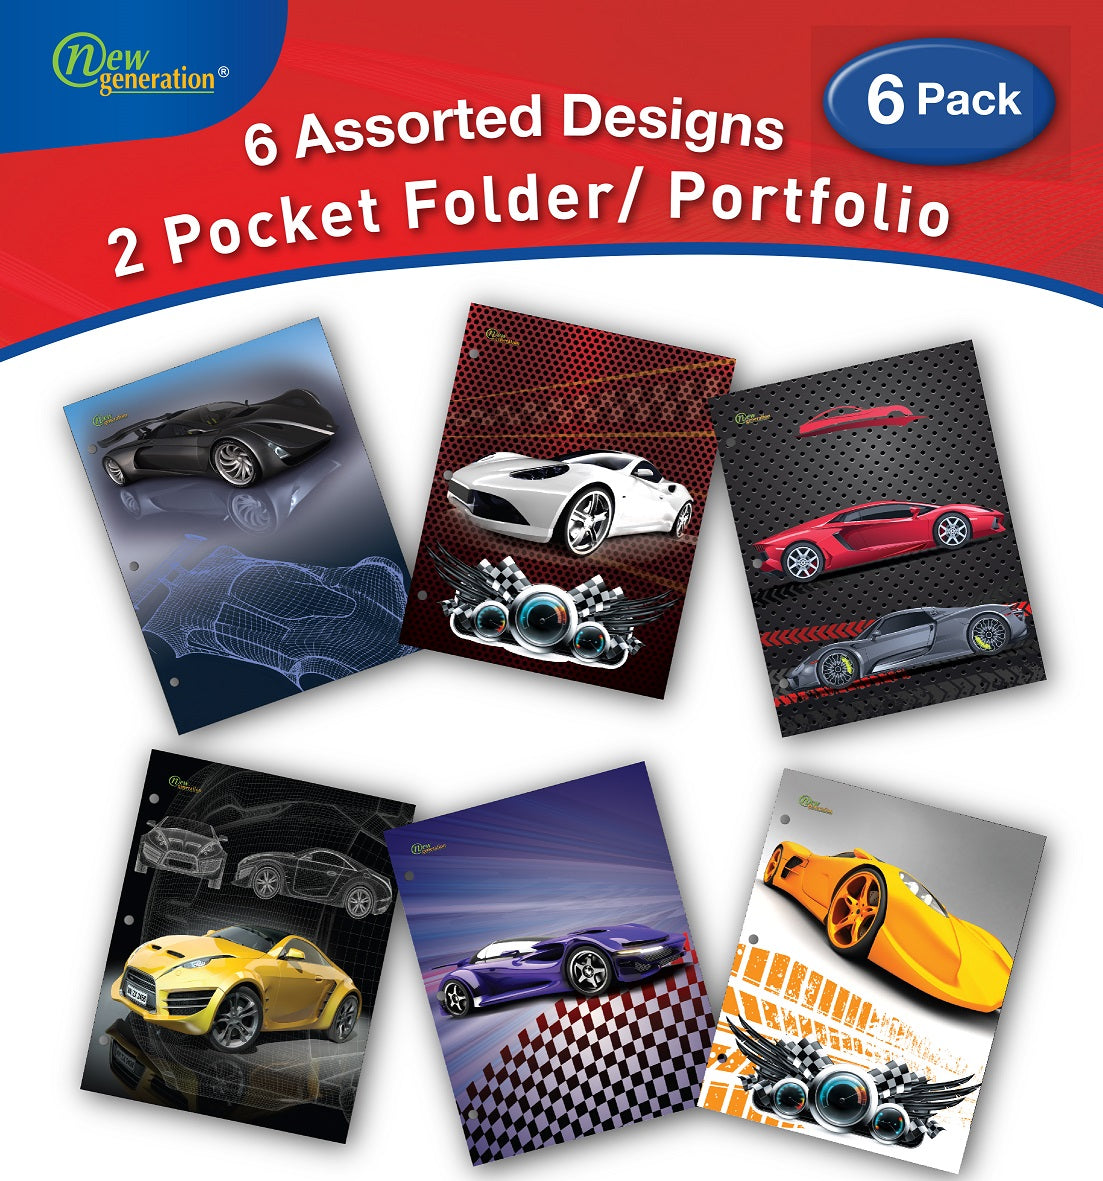 New Generation - Cars - 2 Pocket Folder / Portfolio, 6 Pack,